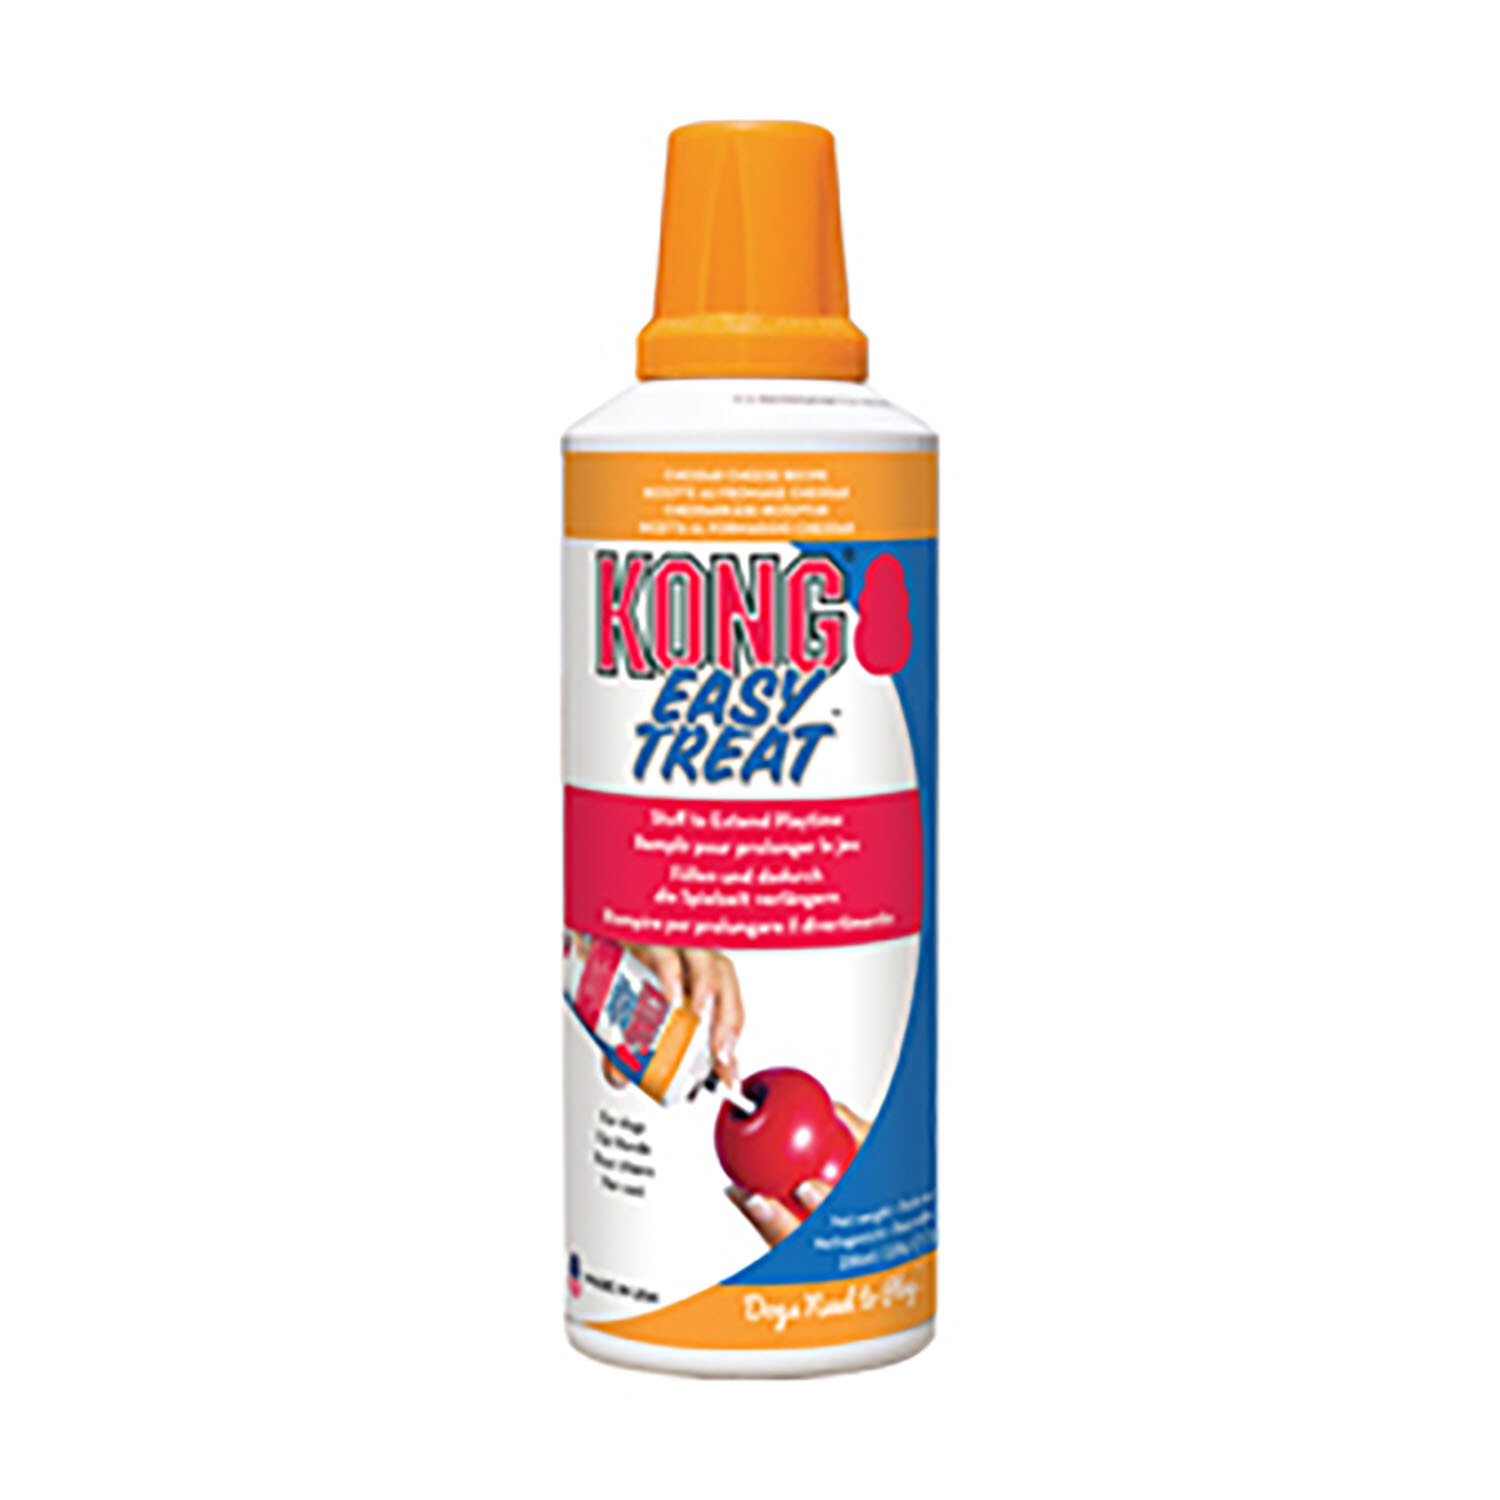 Kong Easy Treat Spray - Cheddar Cheese Image 1